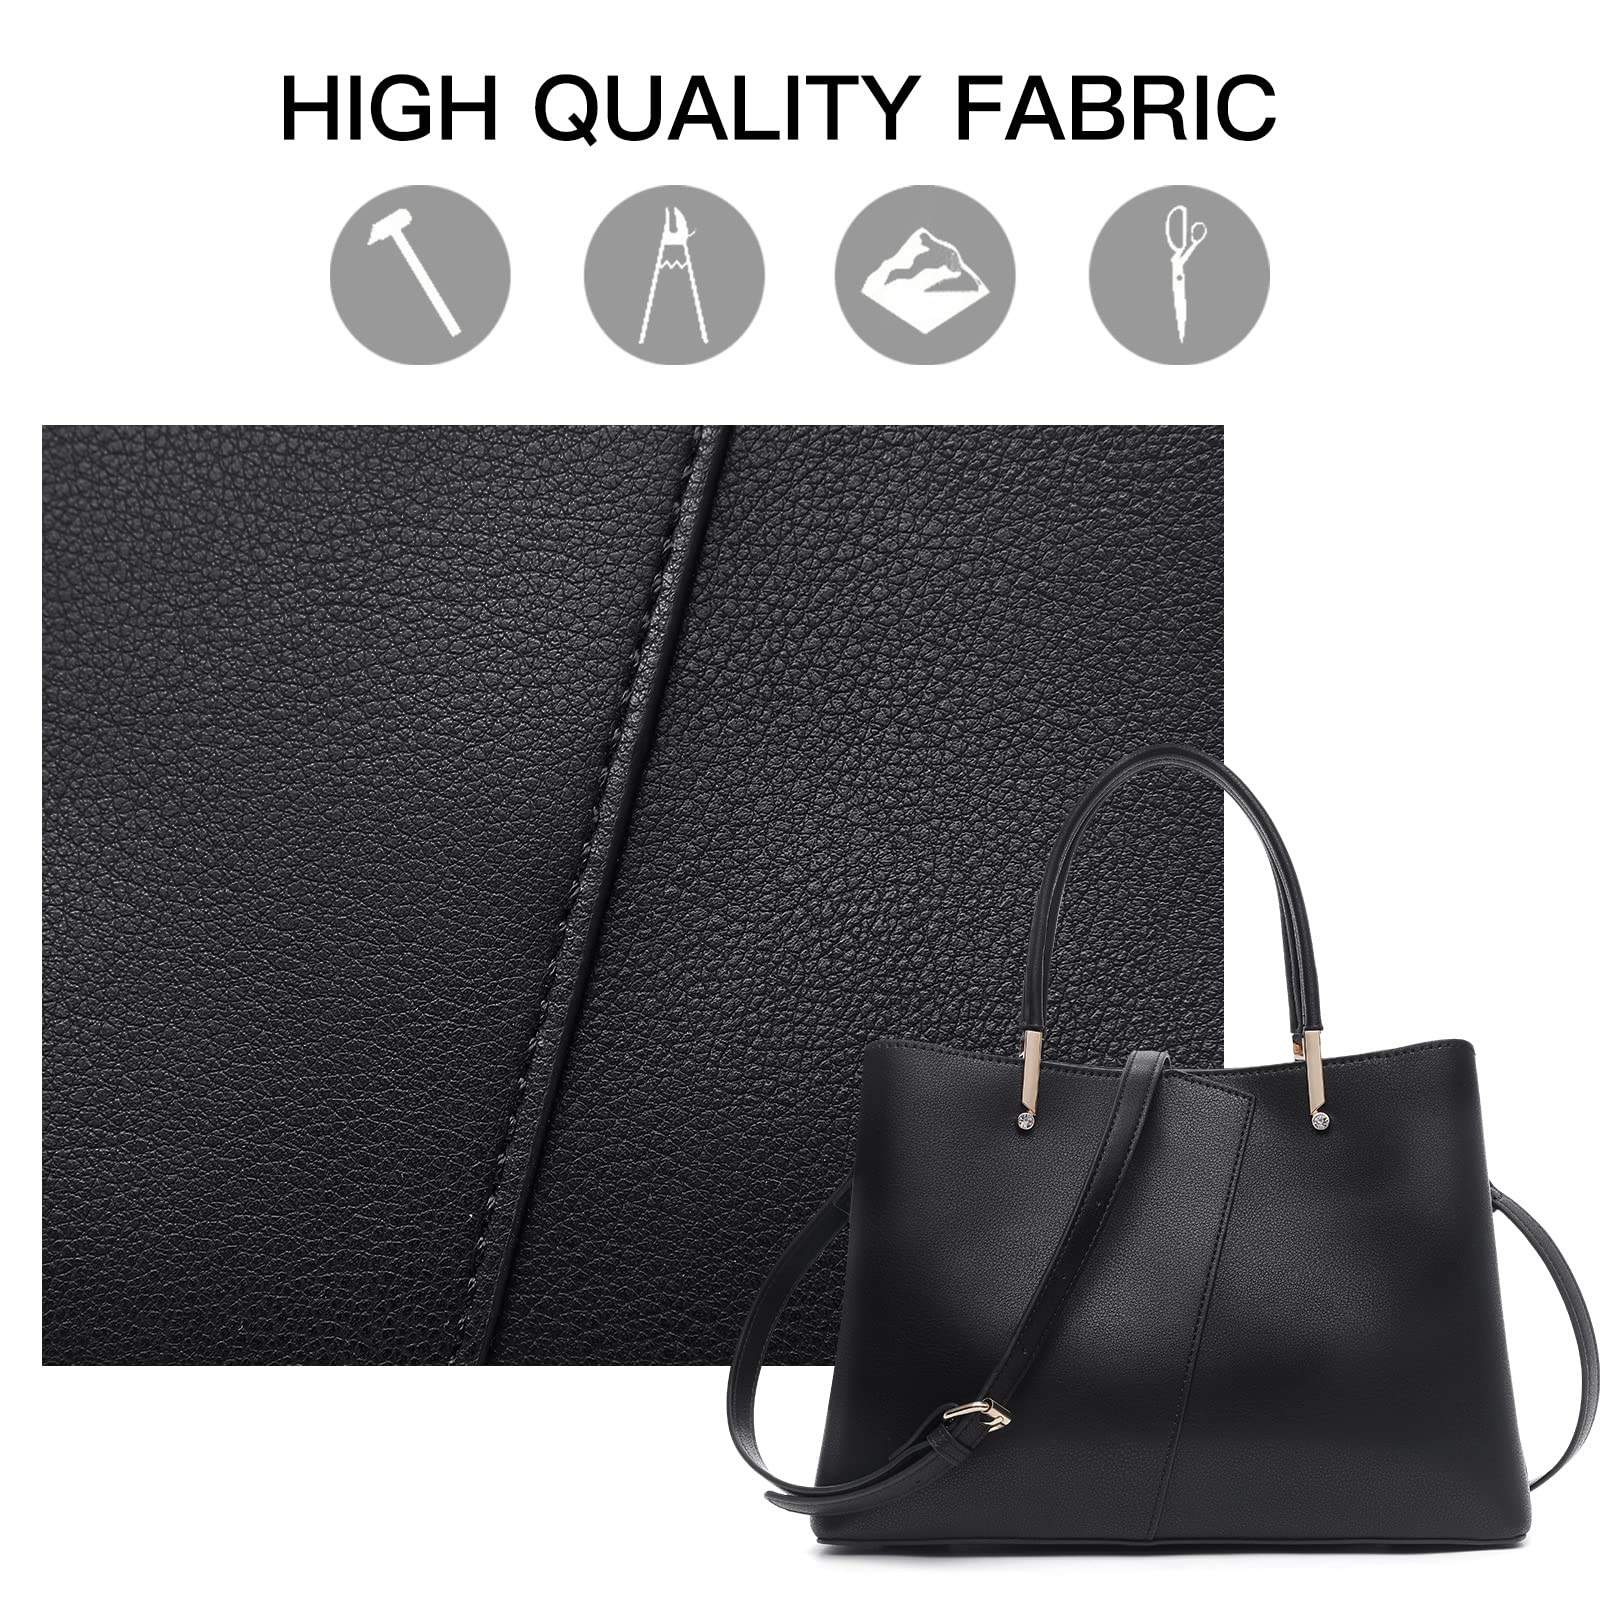 HENG REN Women's Leather Handbags Shoulder Bags,Medium Classical Style Purses Top Handle Satchel Bag for daily.